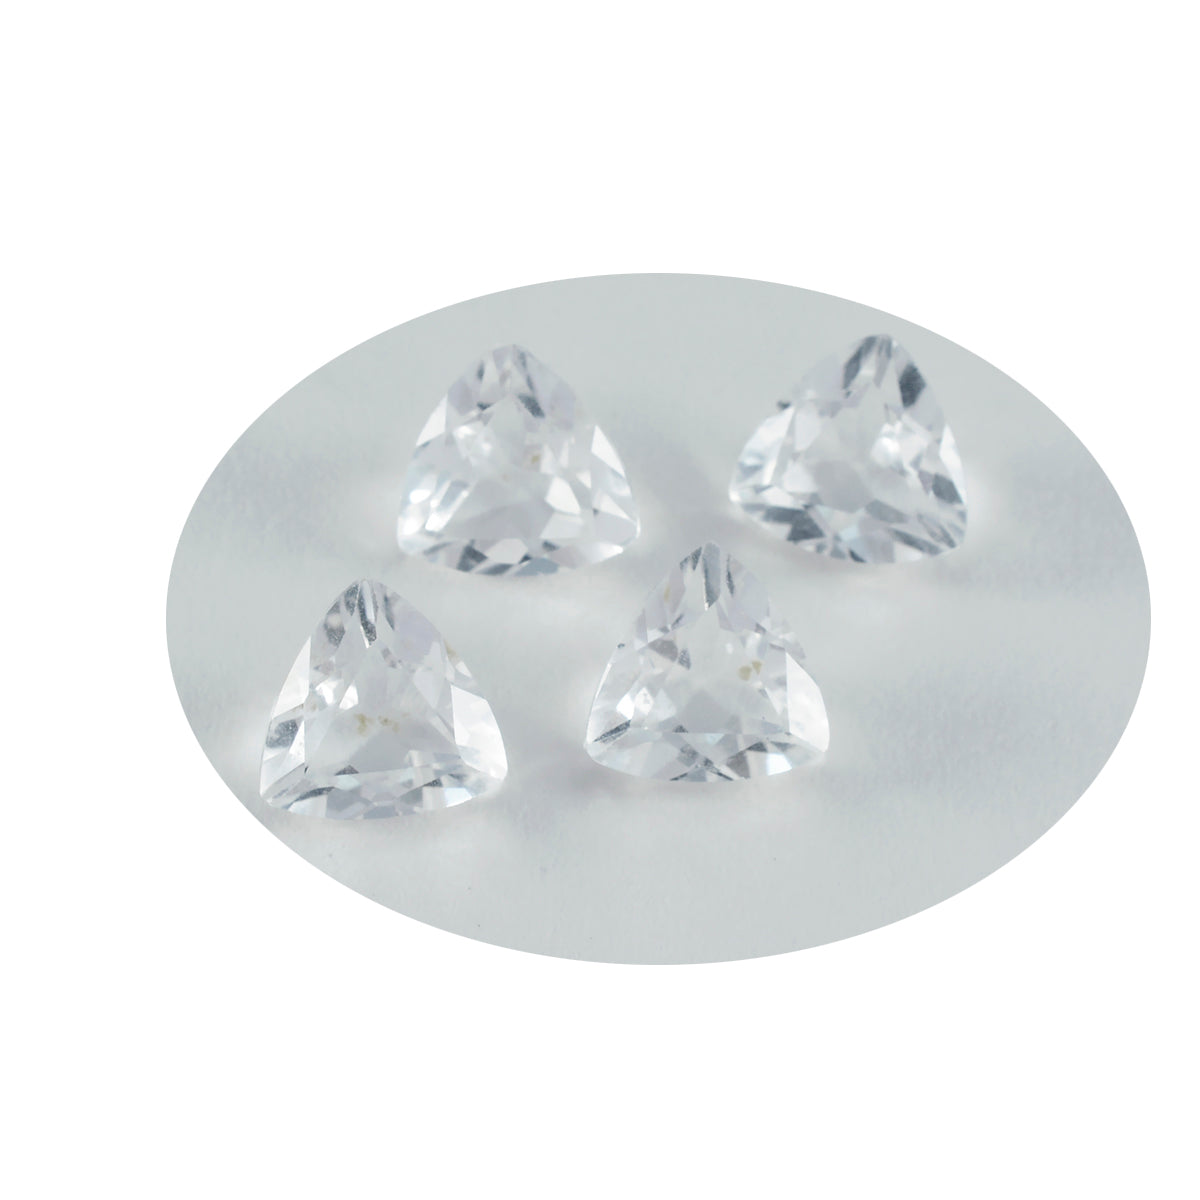 Riyogems 1PC White Crystal Quartz Faceted 13x13 mm Trillion Shape AA Quality Gems